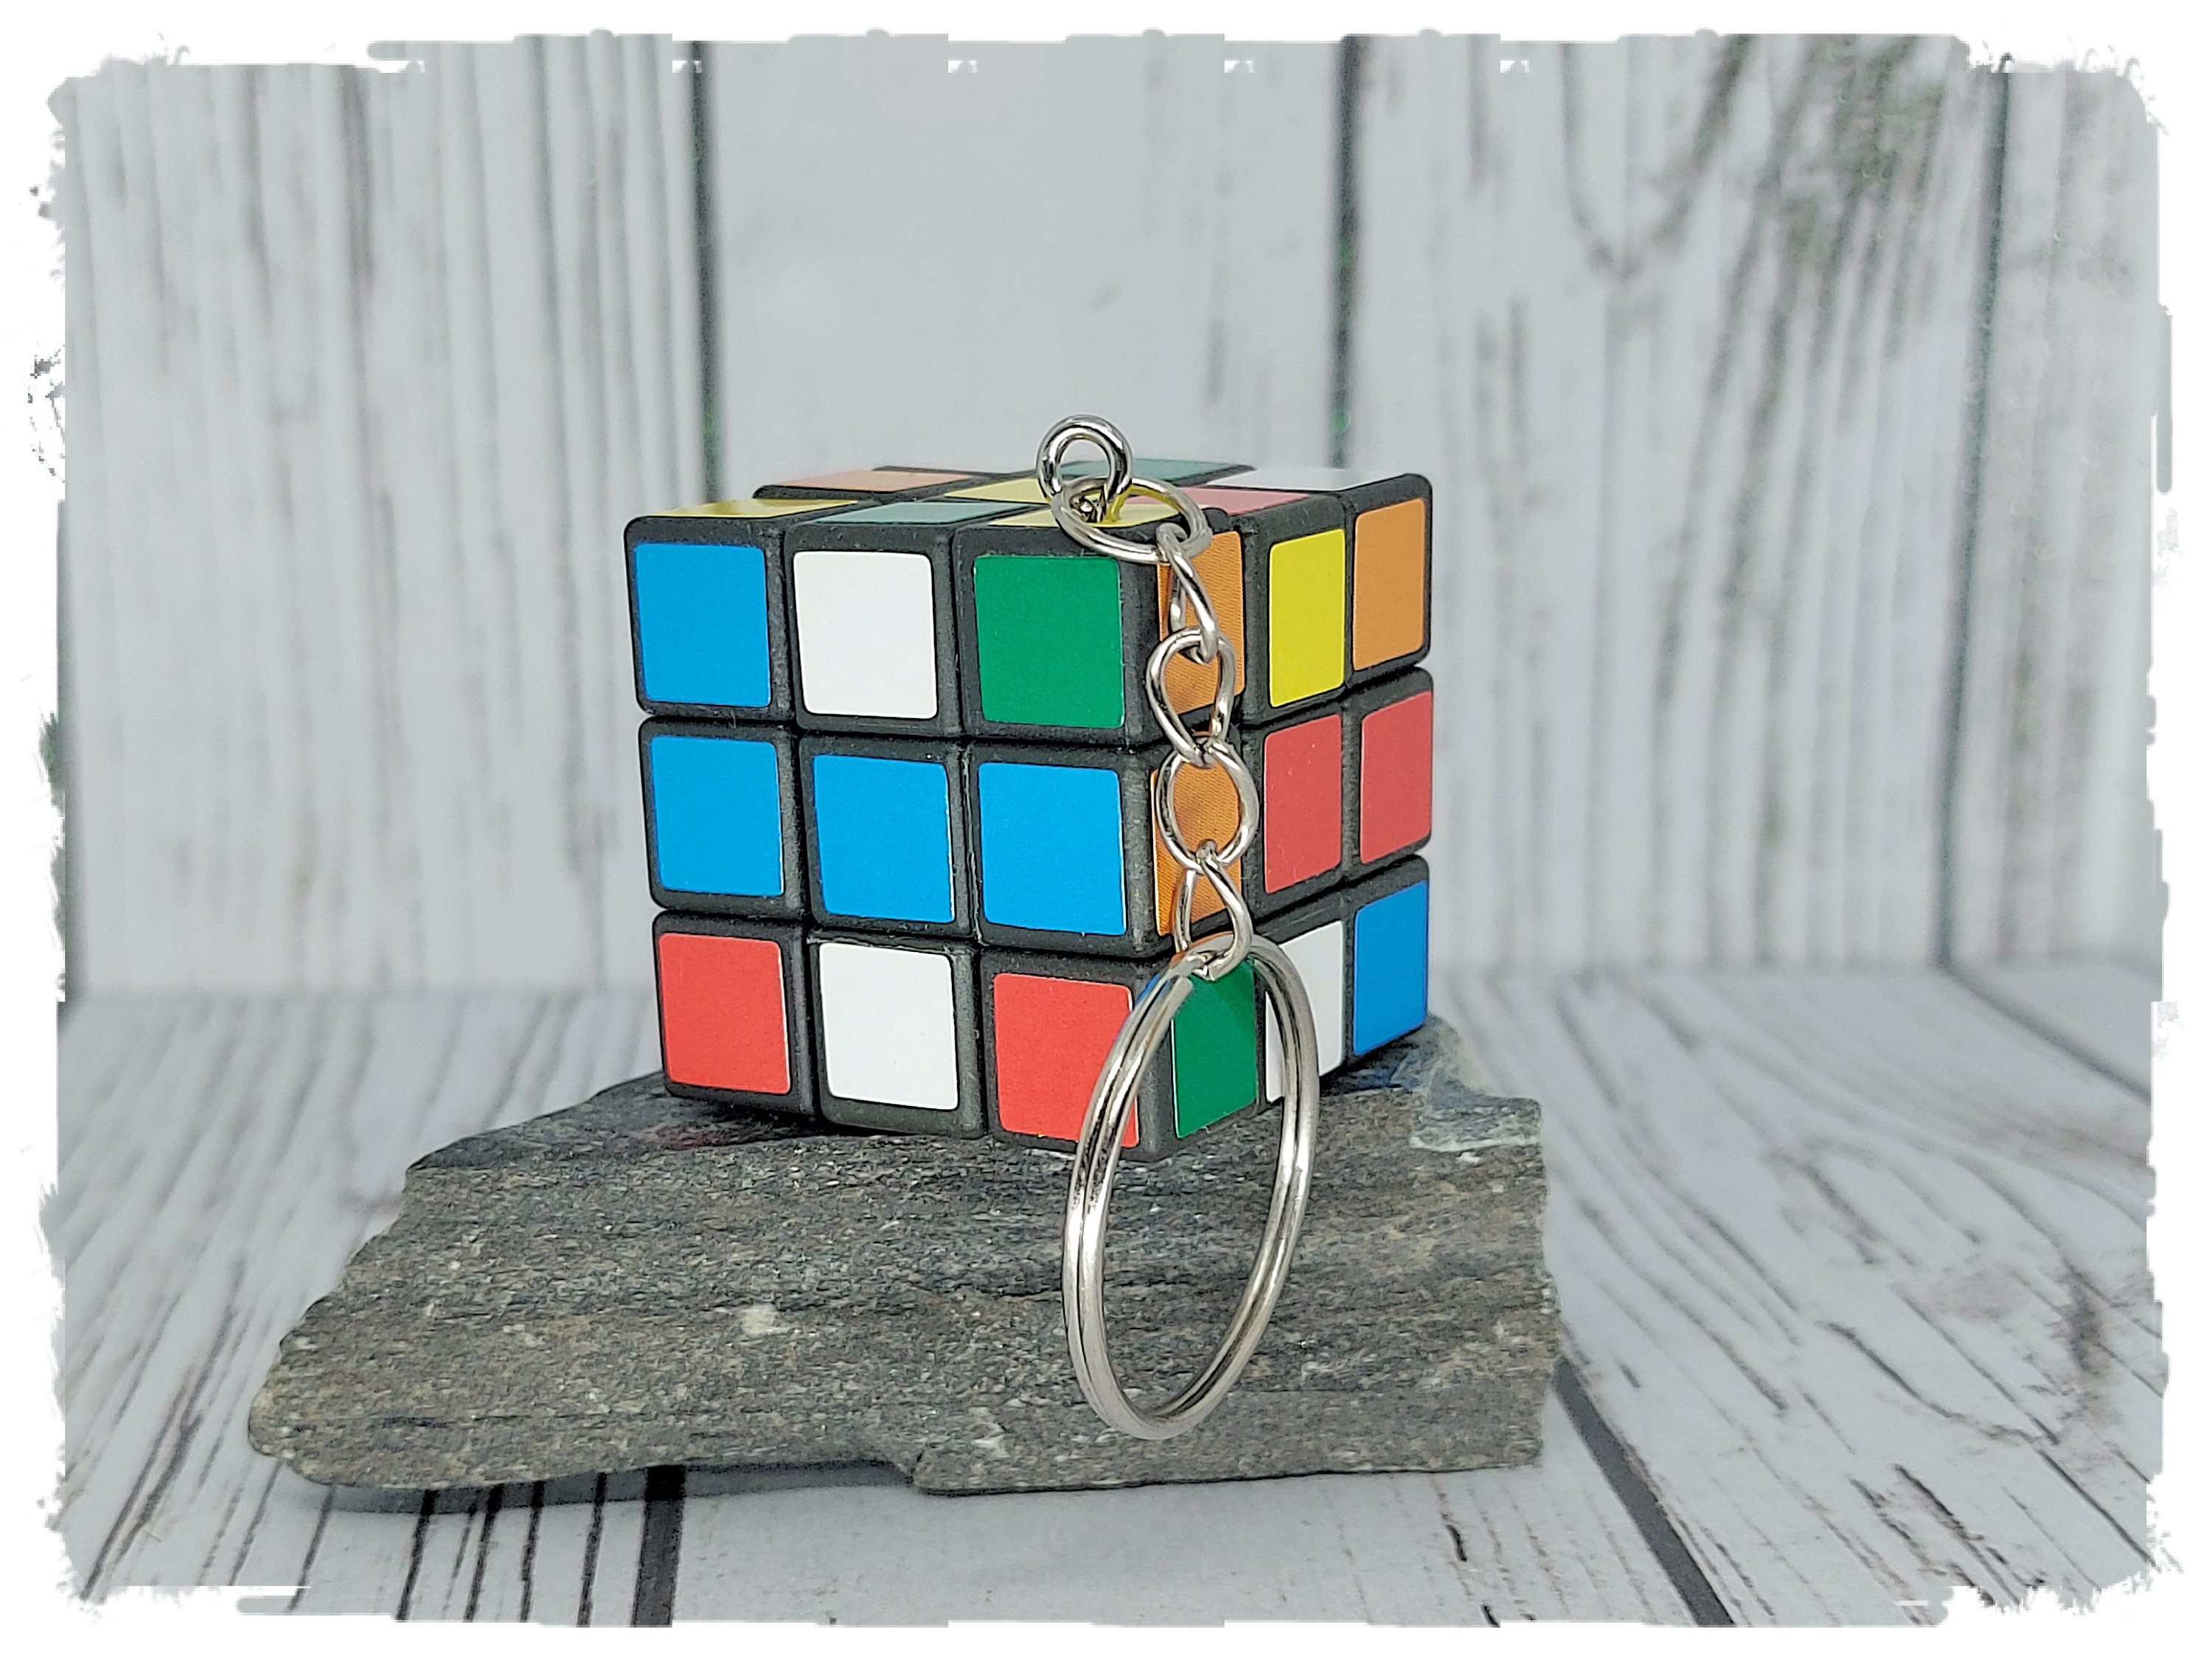 Mini 1cm 3x3 - World's Smallest Cube!